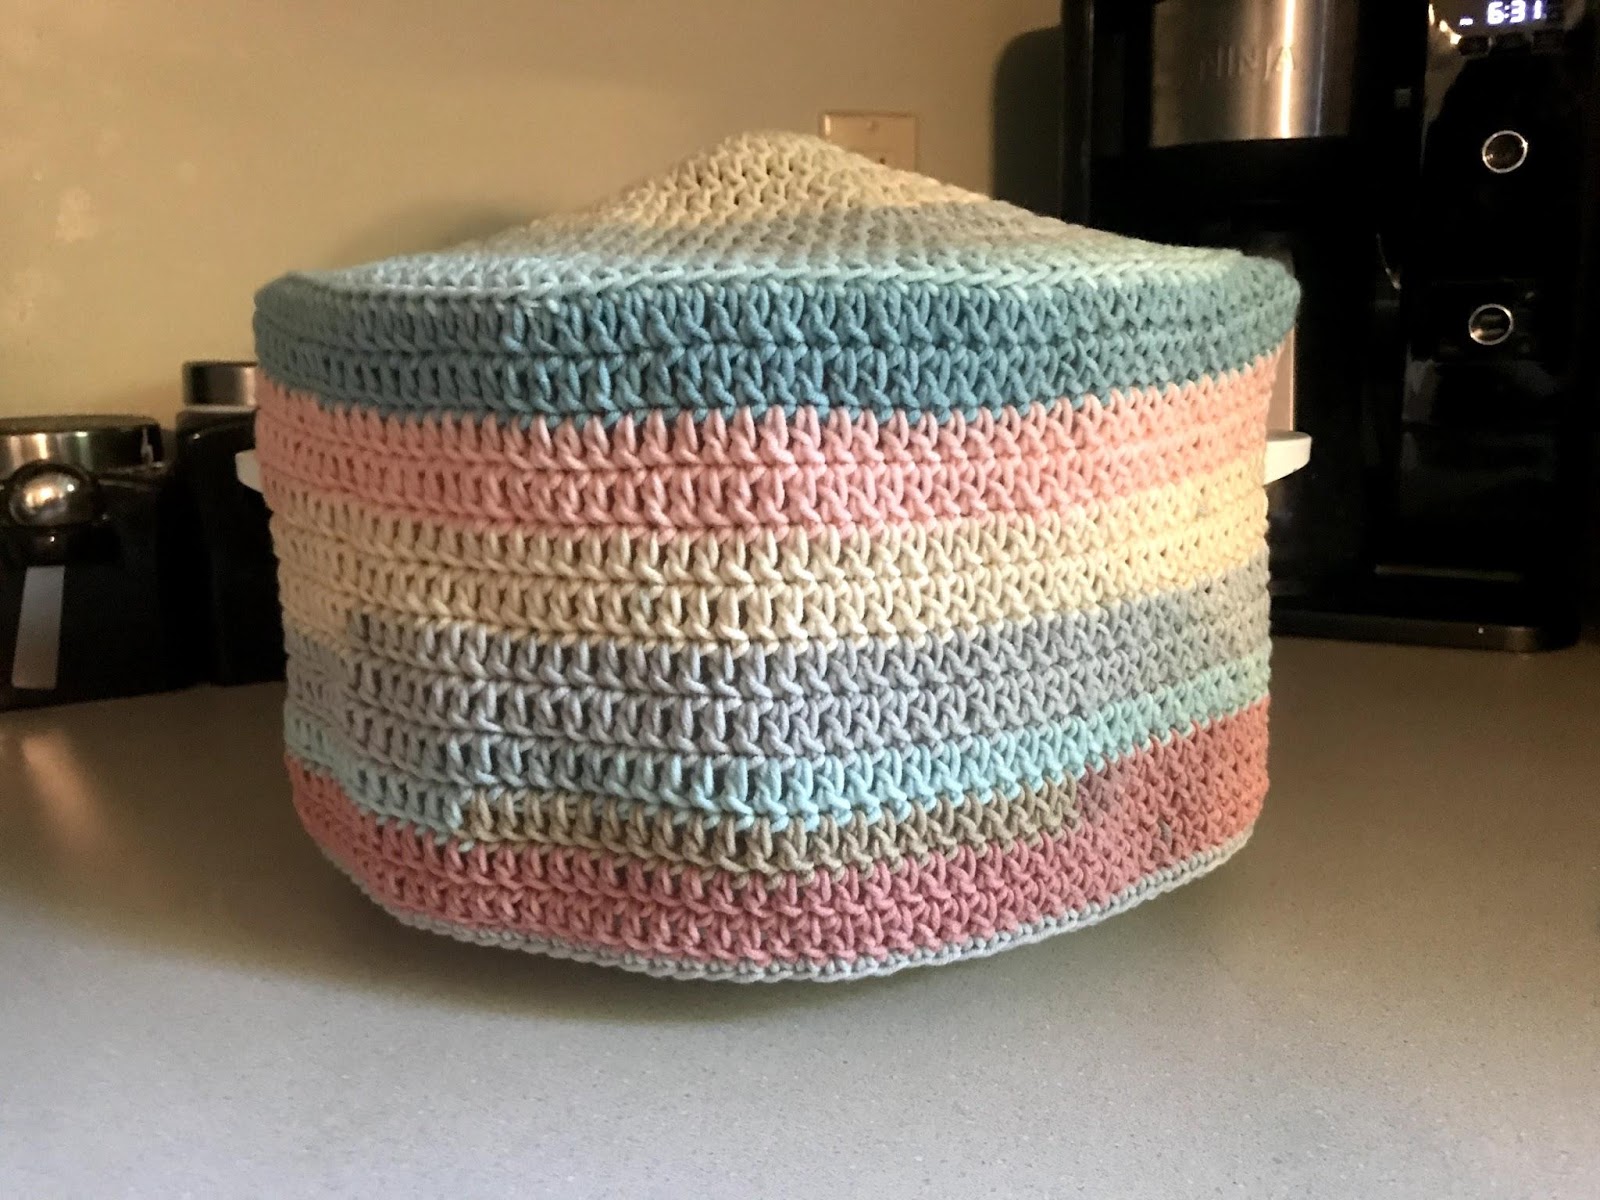 4 quart crockpot cover crochet pattern